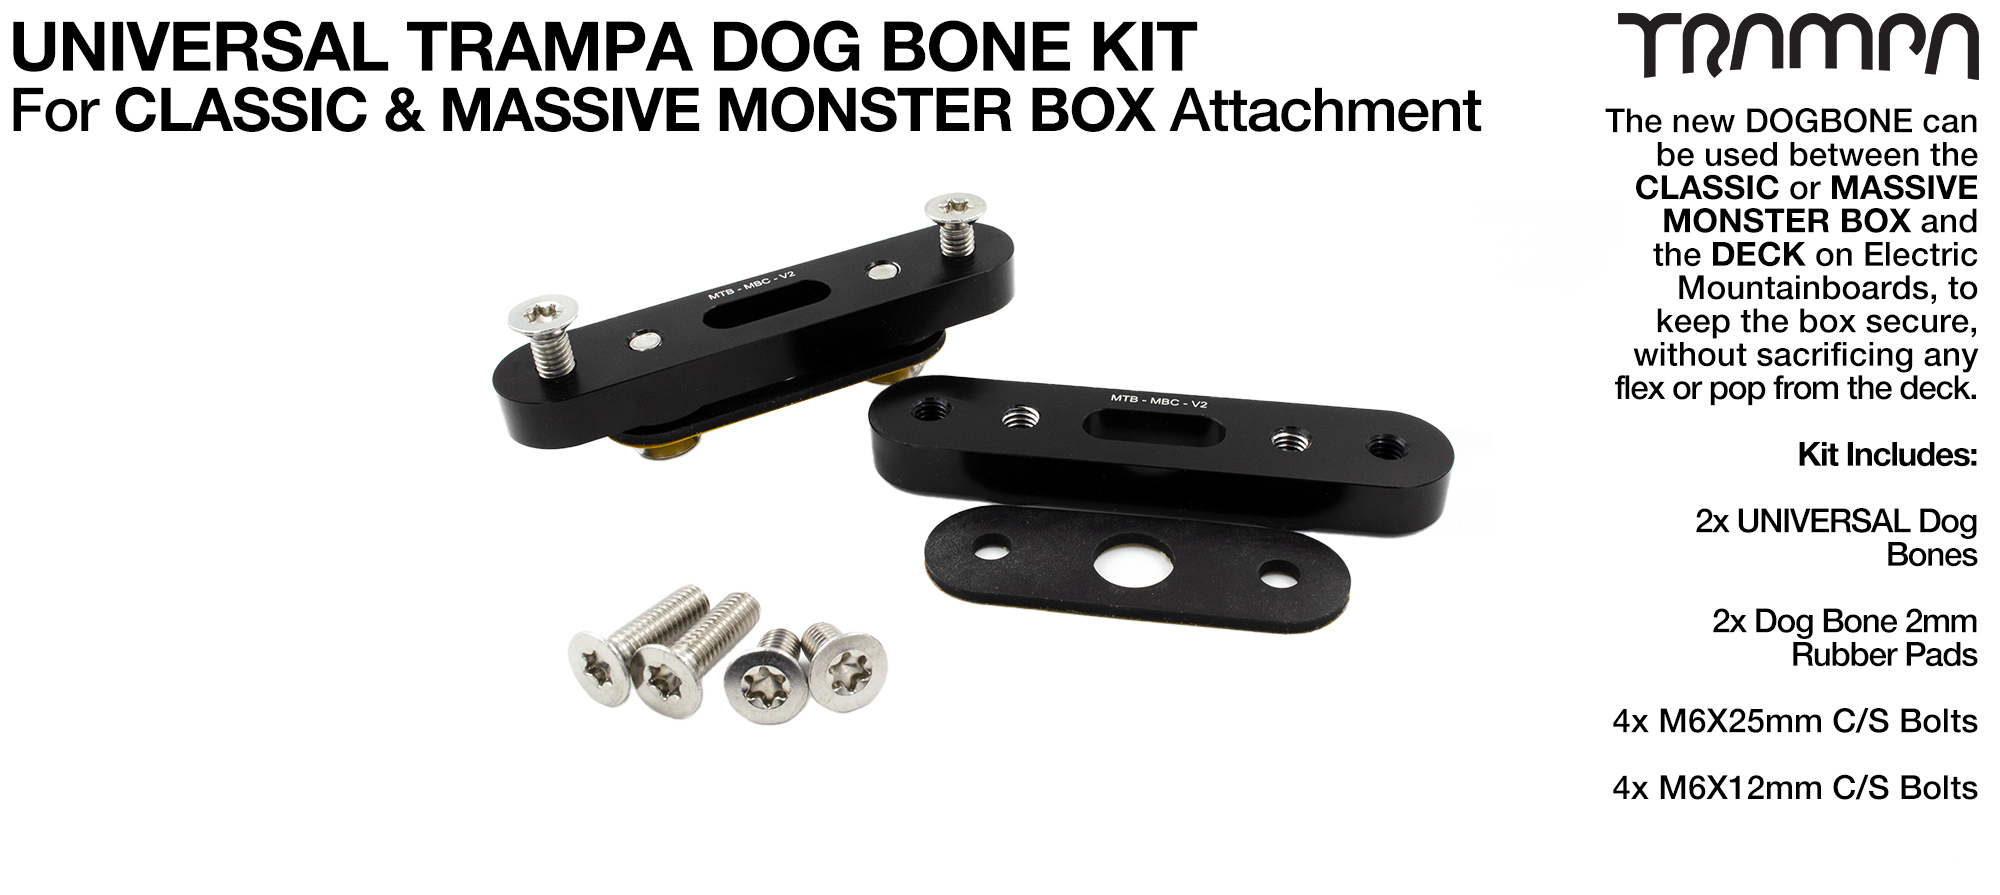 UNIVERSAL DOG BONE KIT for MONSTER BOX attachment